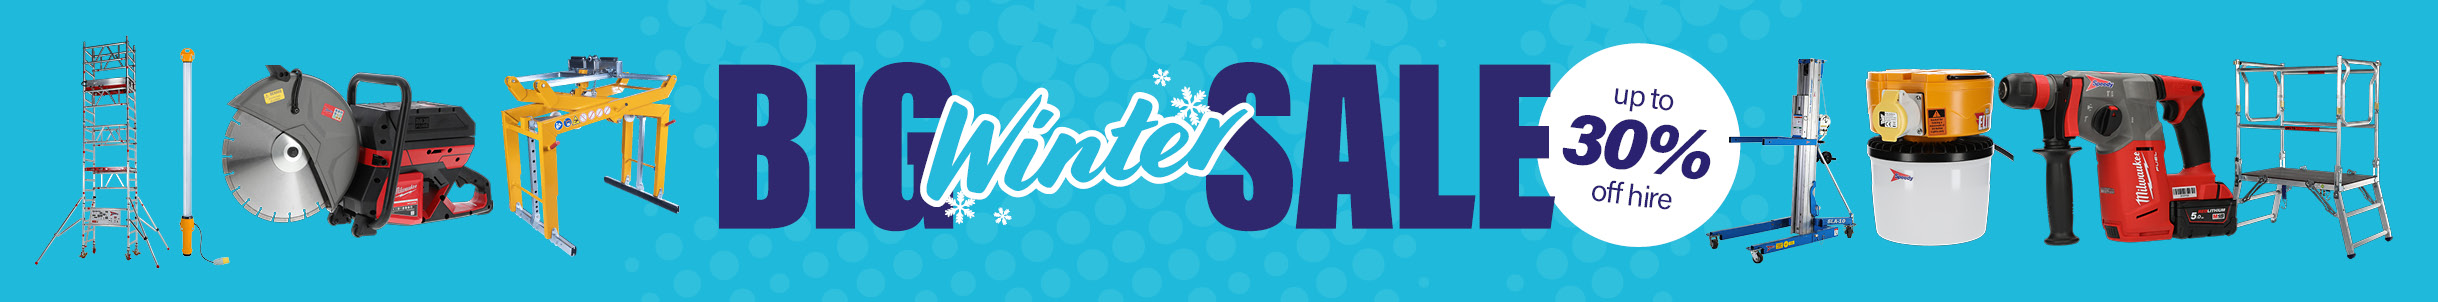 Winter Sale banner2.jpg